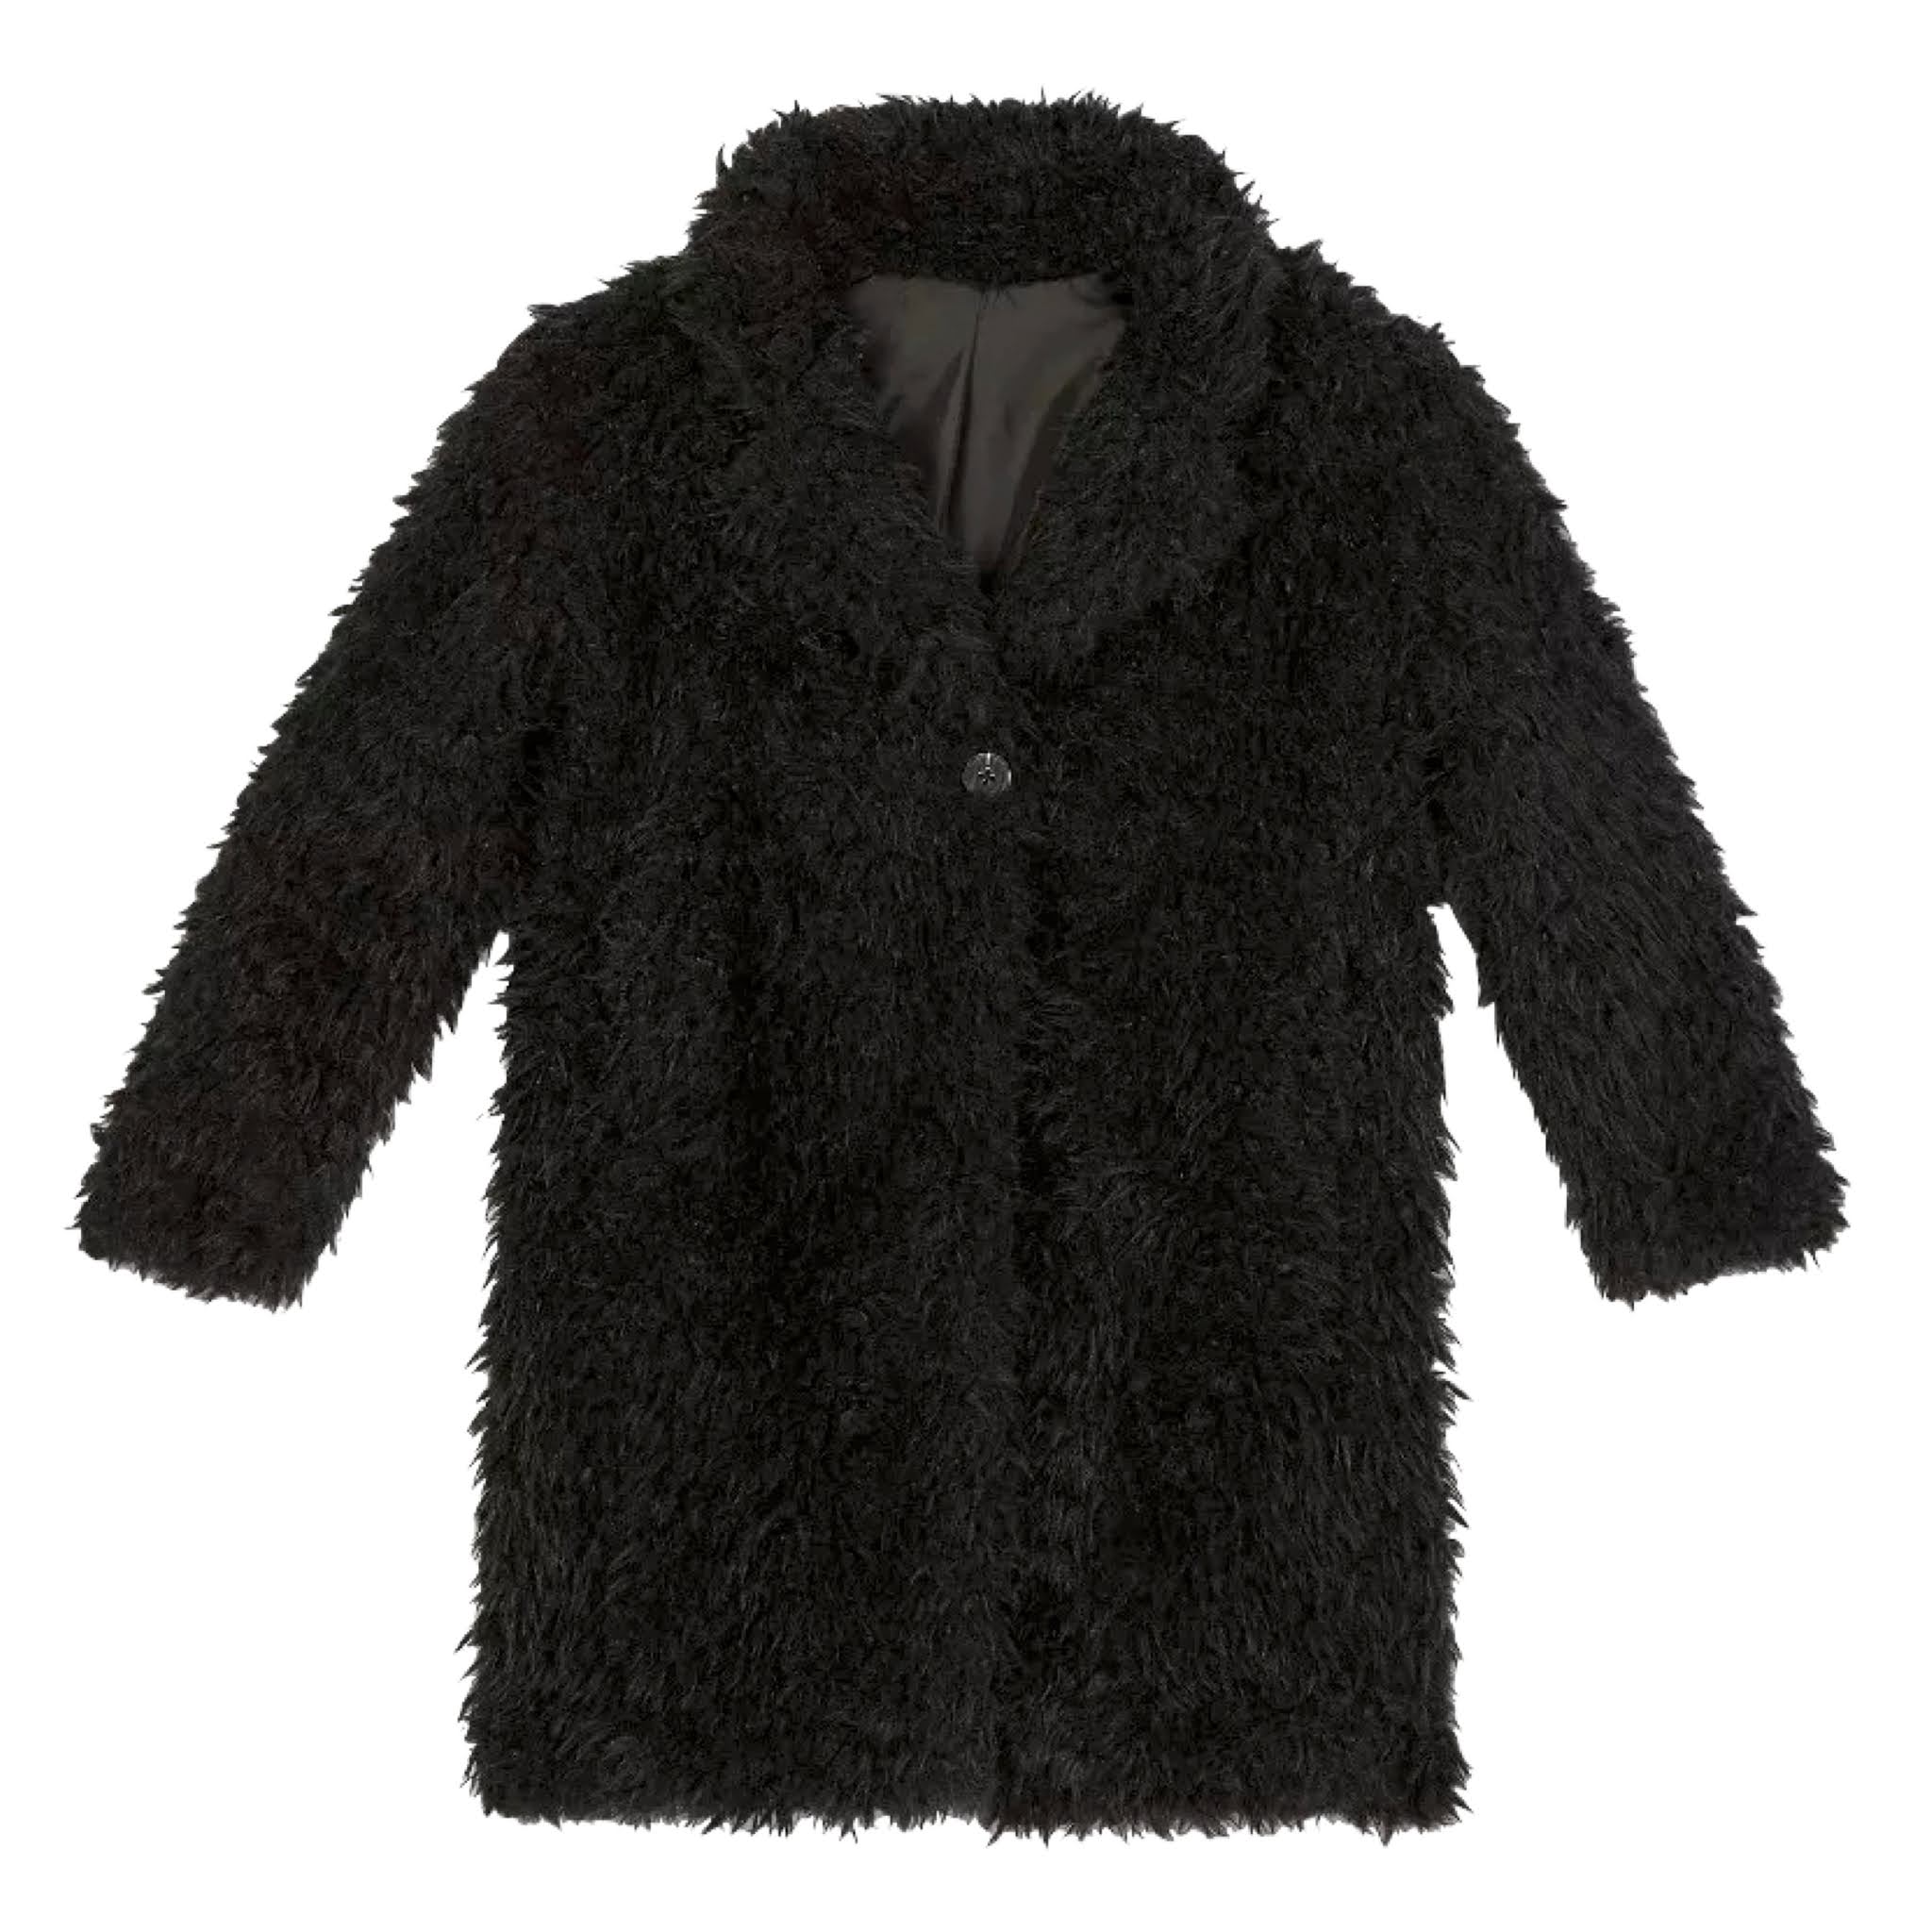 Girls Black Sherpa Coat from Target